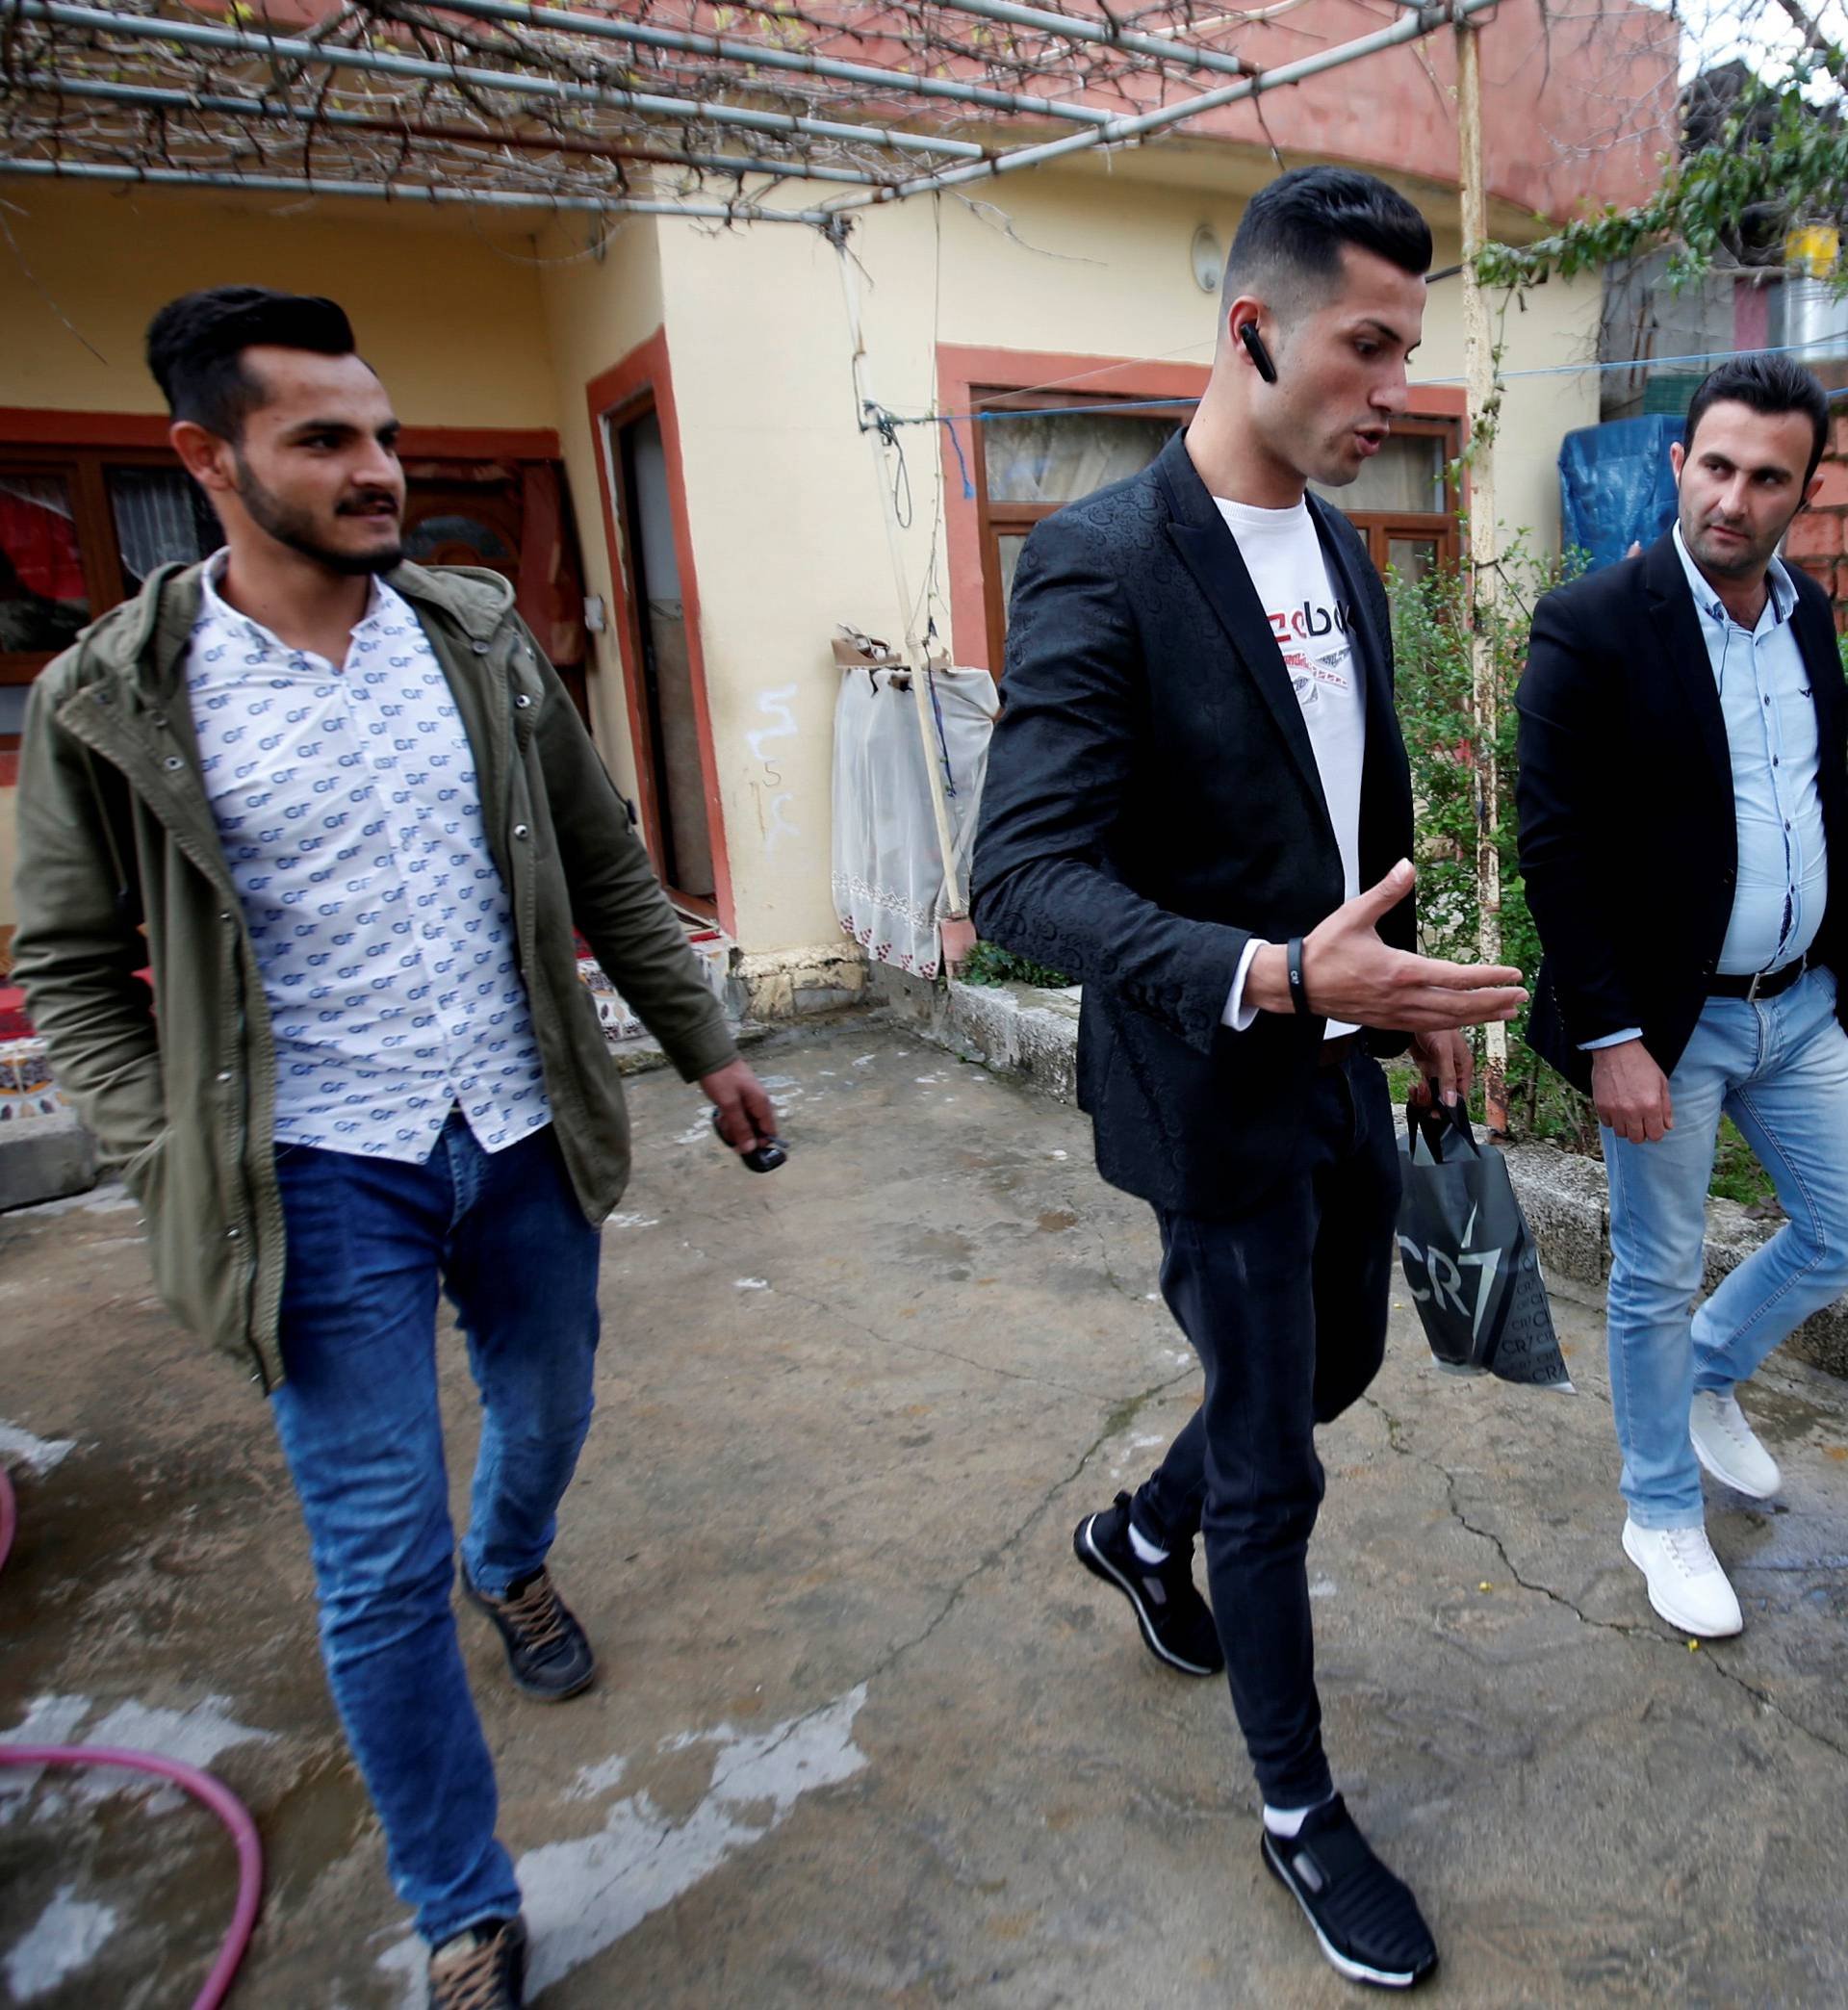 Biwar Abdullah, 25, an Iraqi Kurdish local footballer, who looks like the football player Cristiano Ronaldo, walks with his friends in the district of Soran, northeast of Erbil